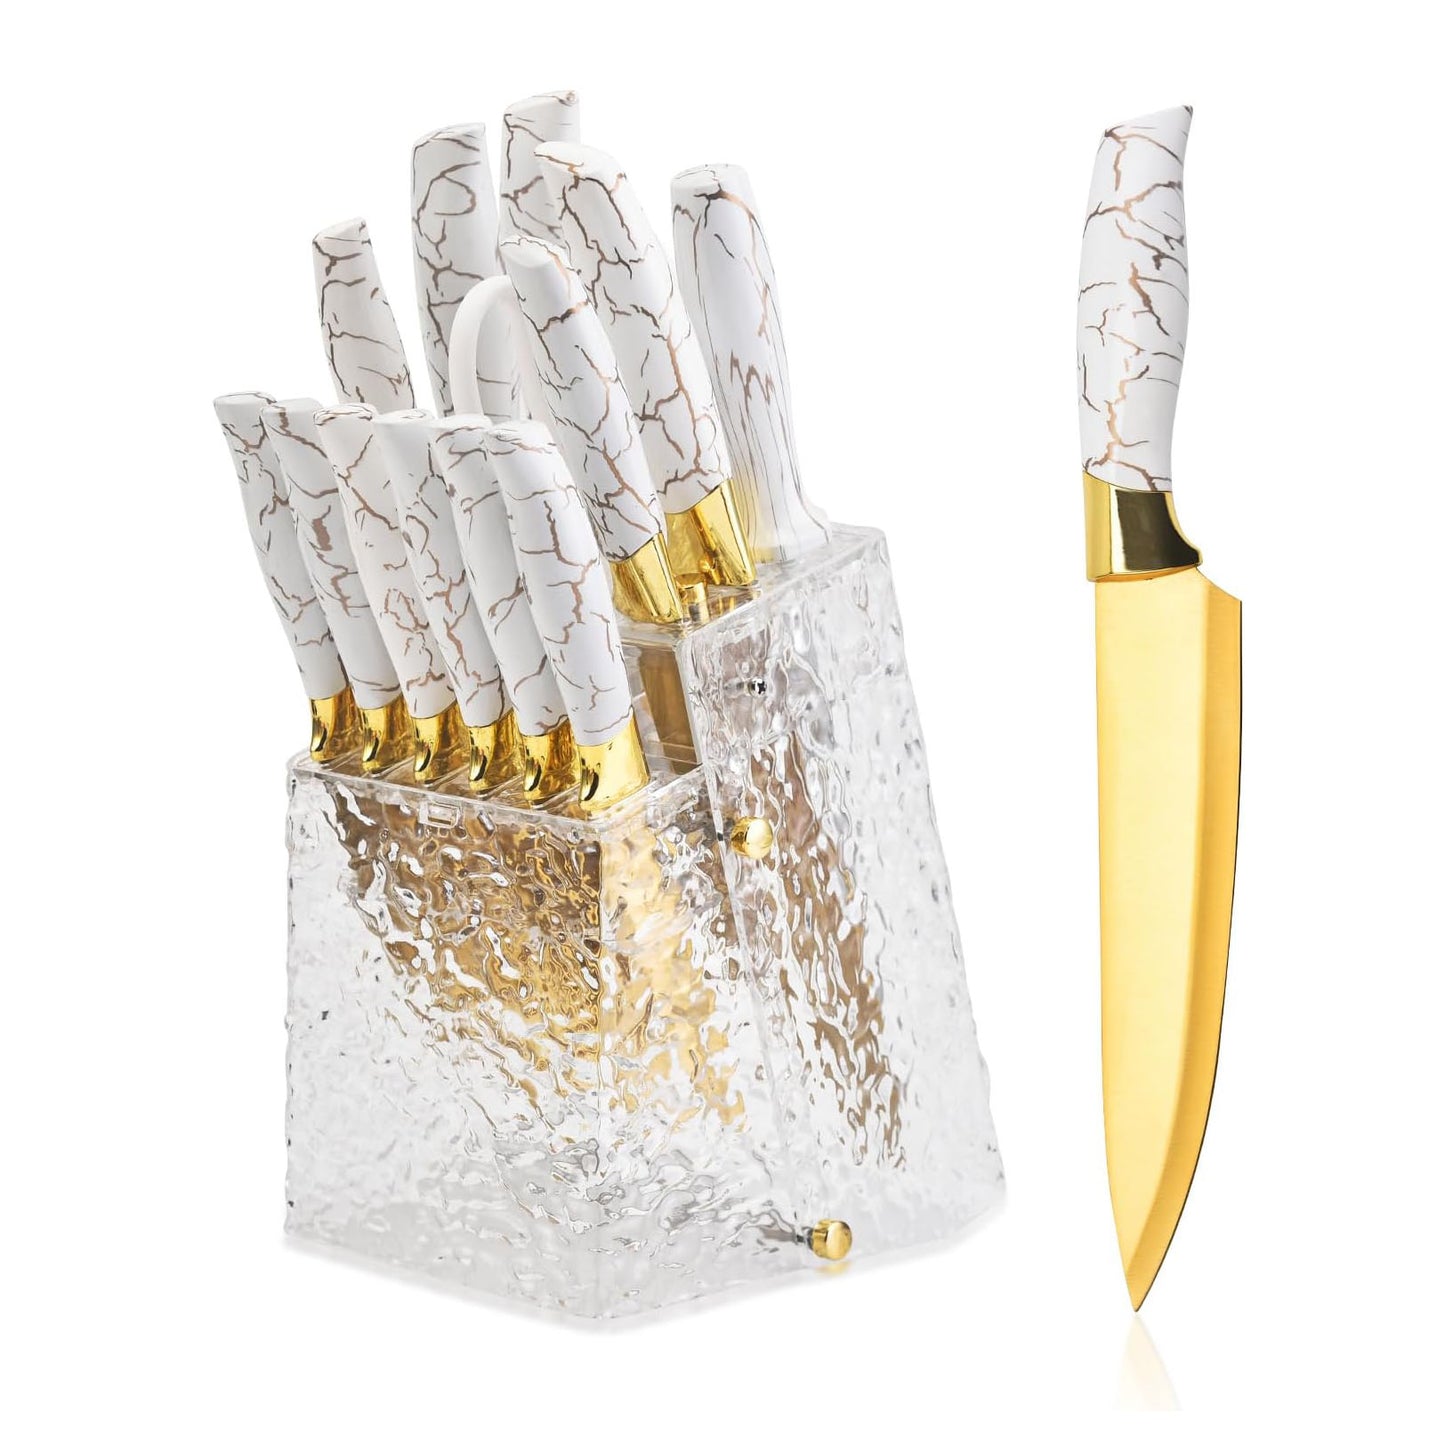 14PCS Kitchen Knife Block Sets with Titanium Coated Blade